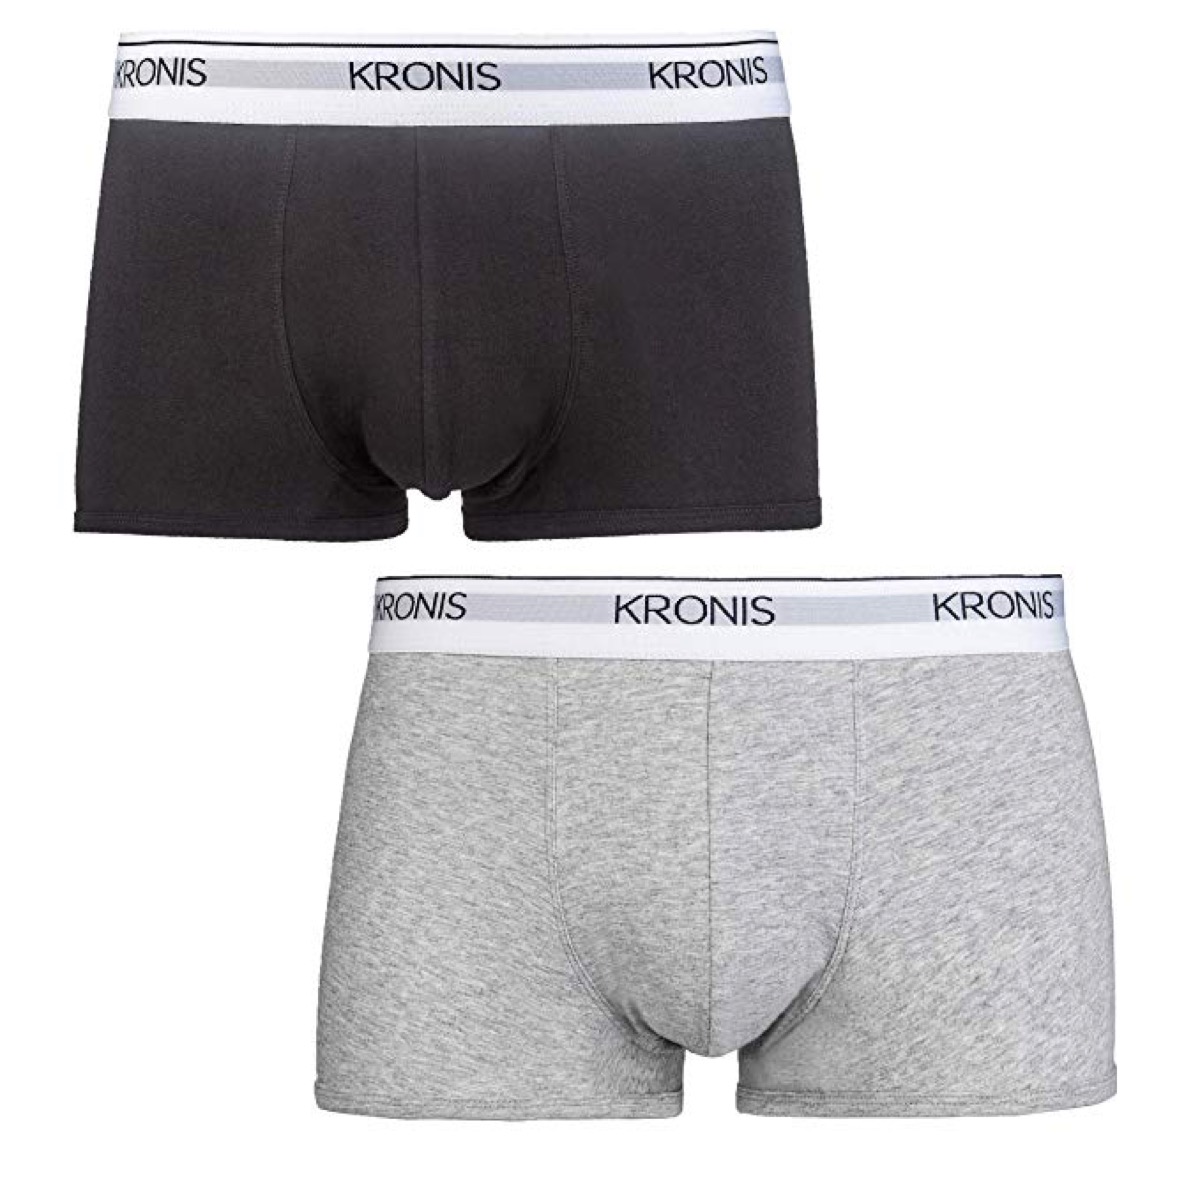 gray and black men's underwear